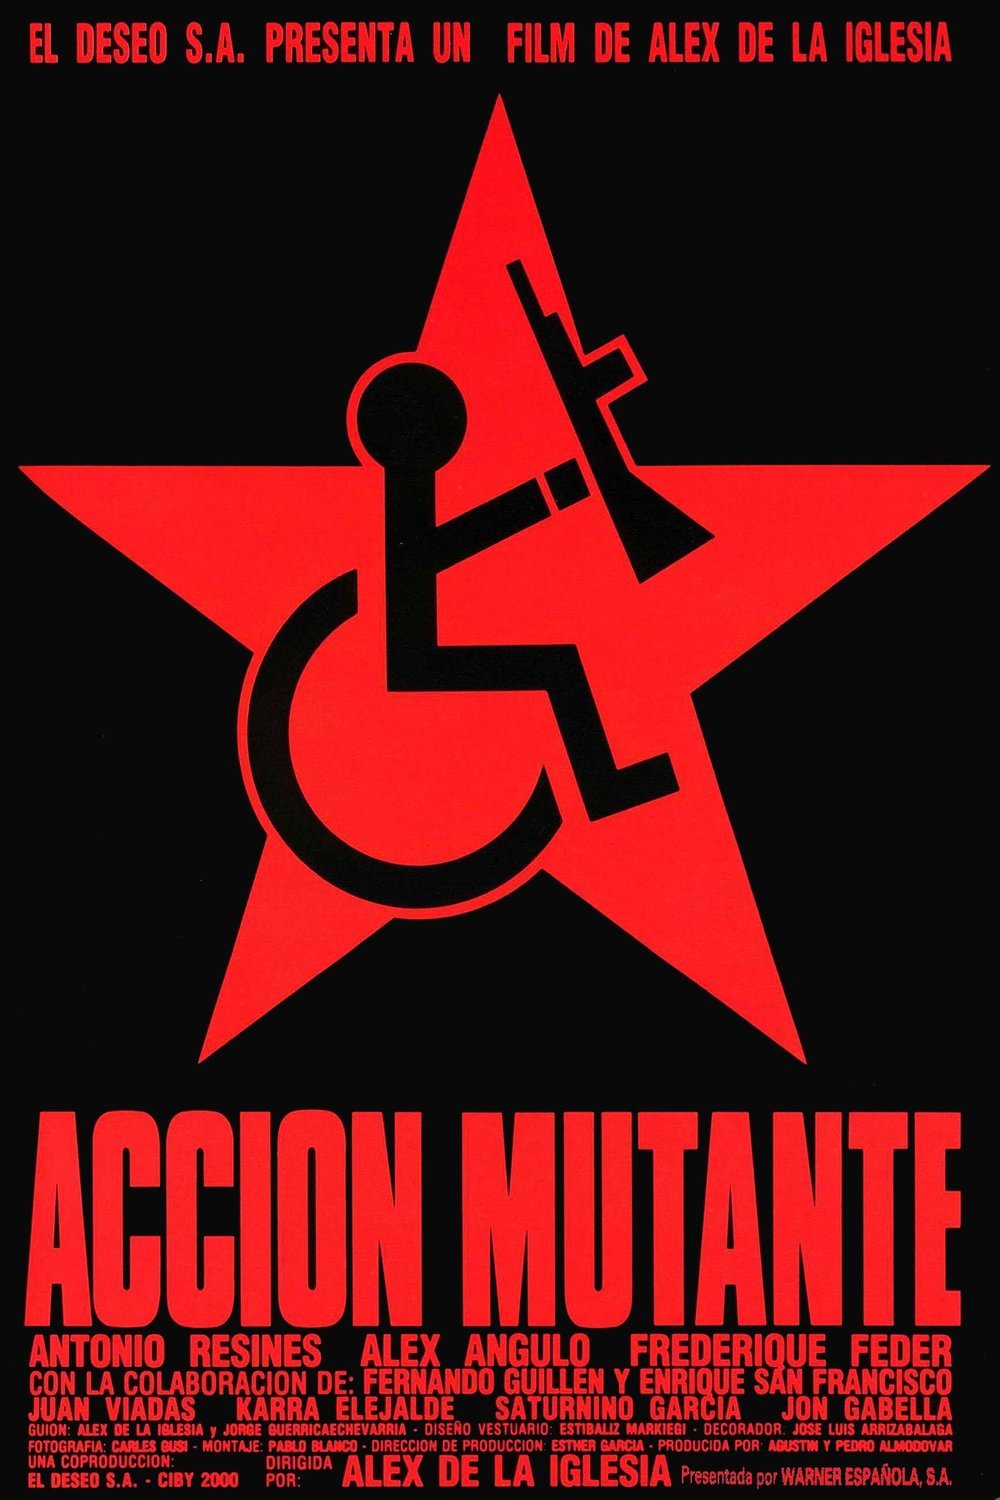 Spanish poster of the movie Acción mutante